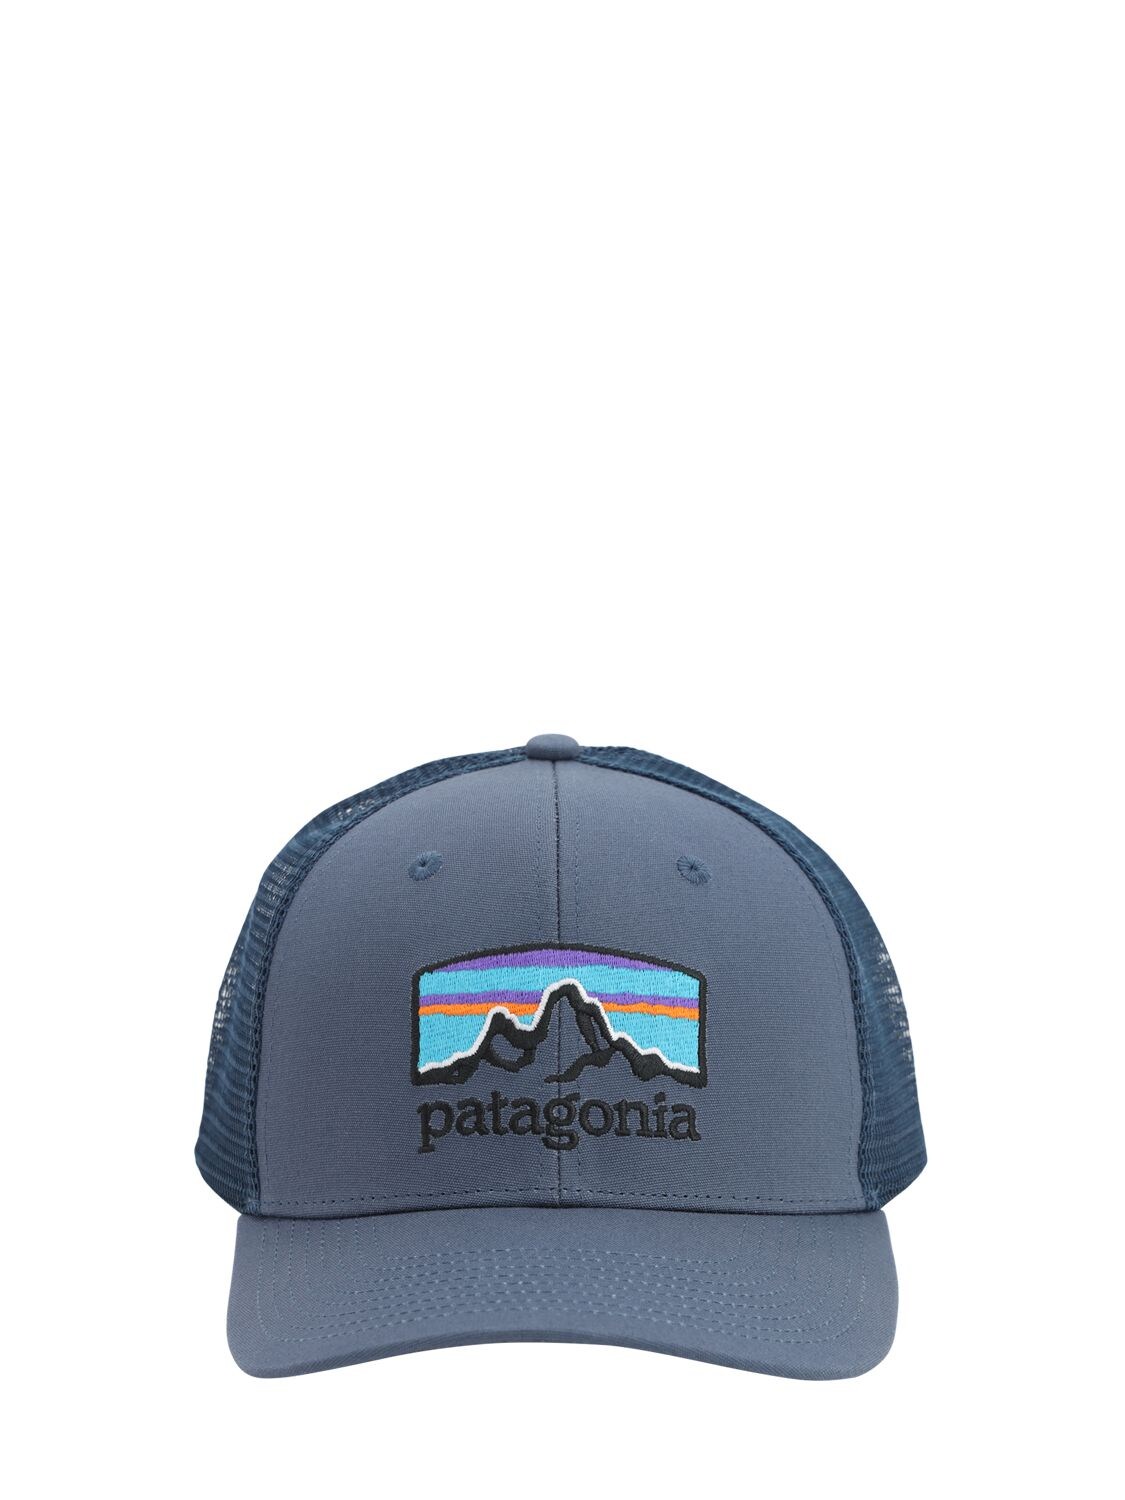 Patagonia Fitz Roy Scope Trucker Hat In Blue